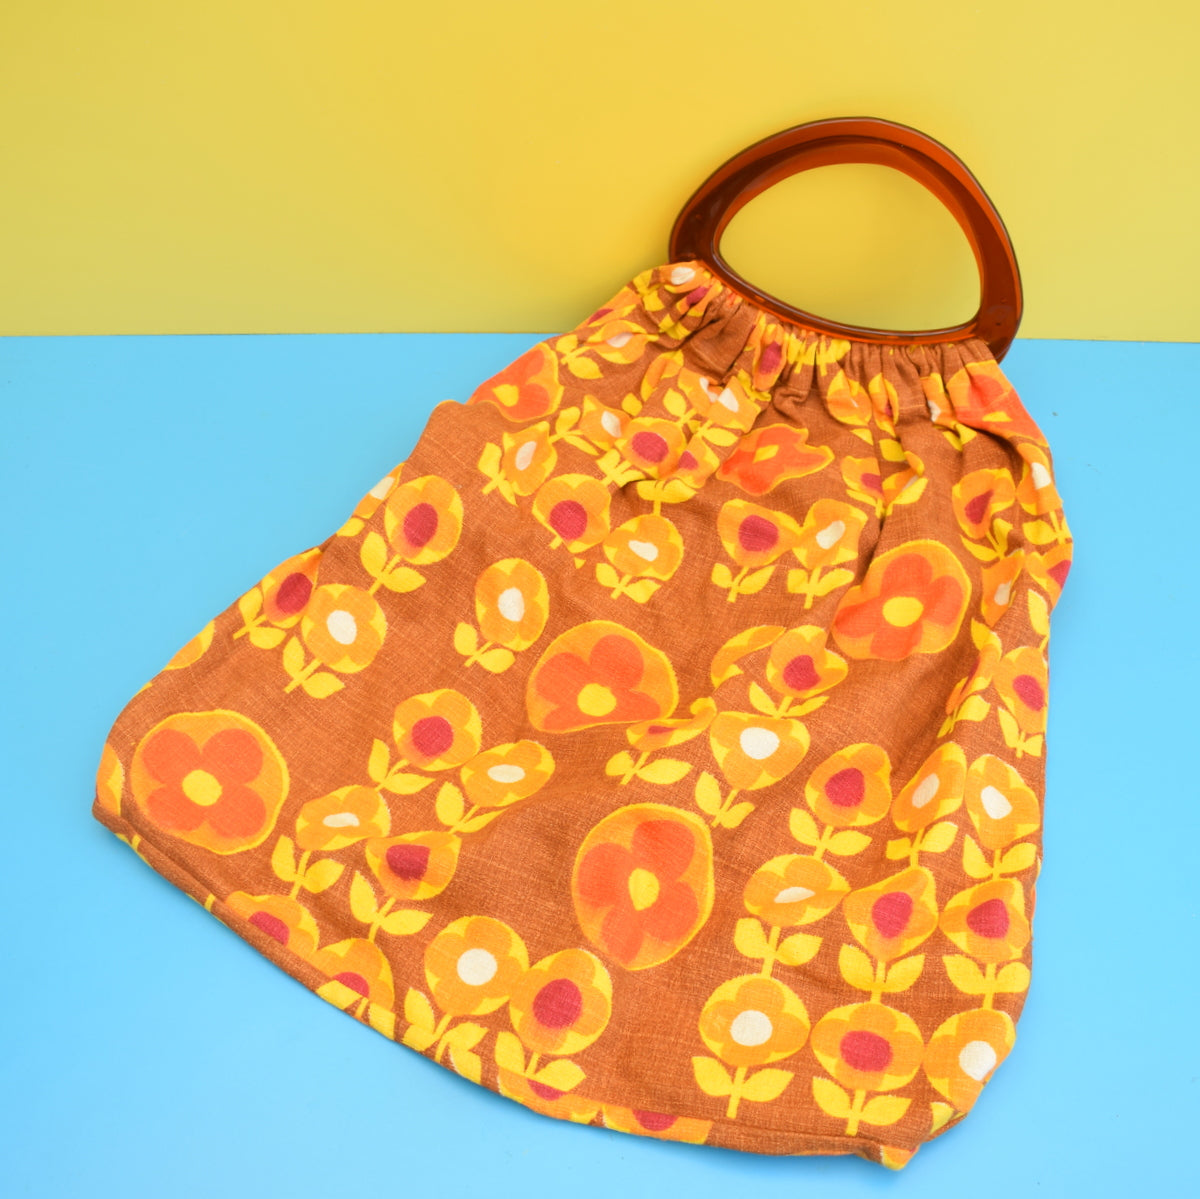 Vintage 1960s Handmade Knitting Bag / Storage Bag - Flower Power - Orange. Yellow & Brown